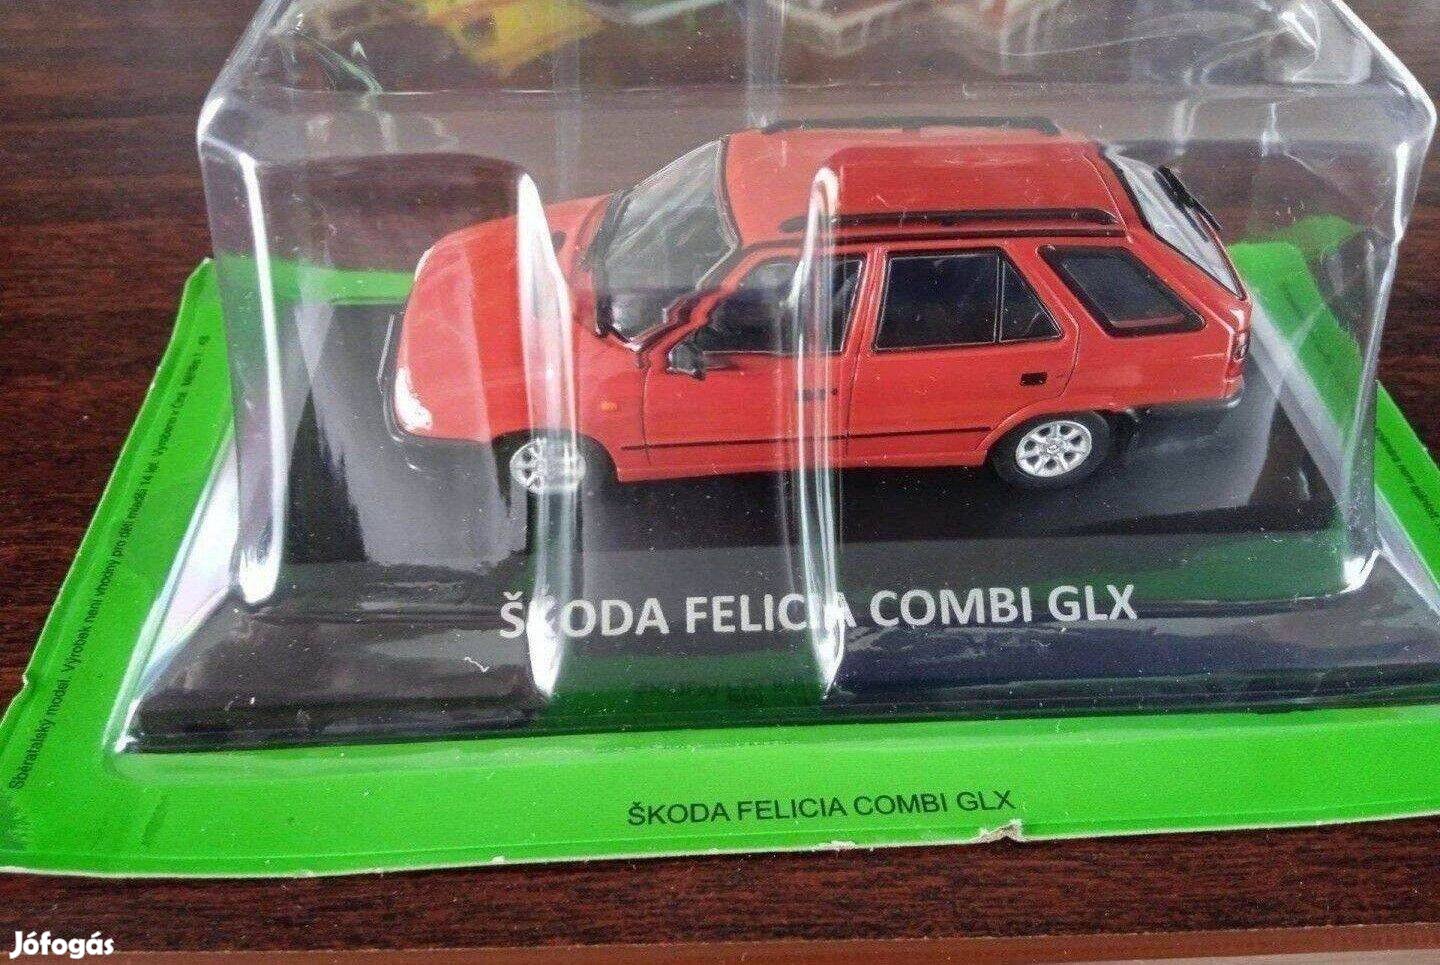 Skoda Felicia combi GLX kisauto modell 1/43 Eladó